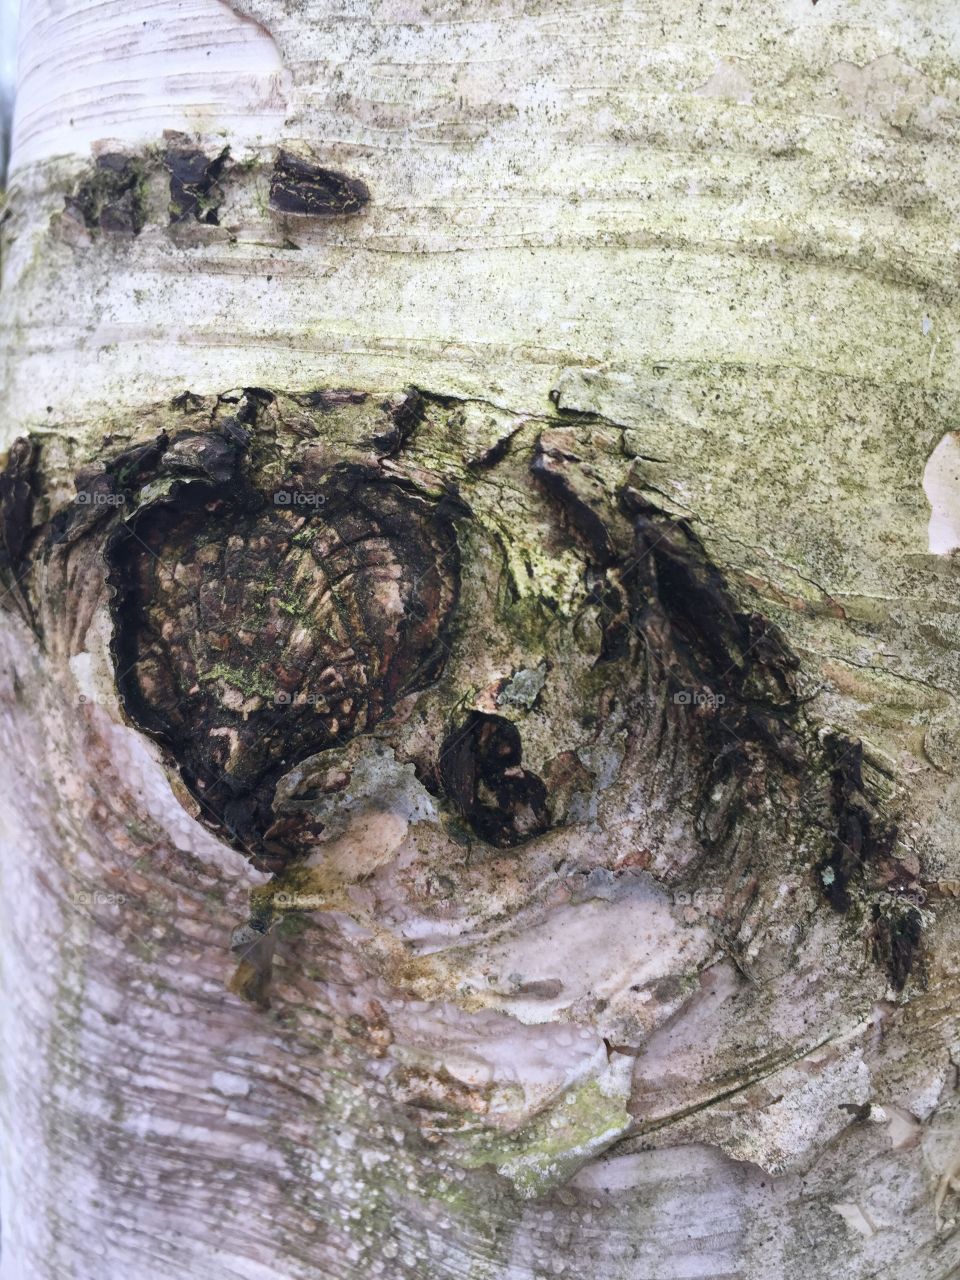 The eye of tree